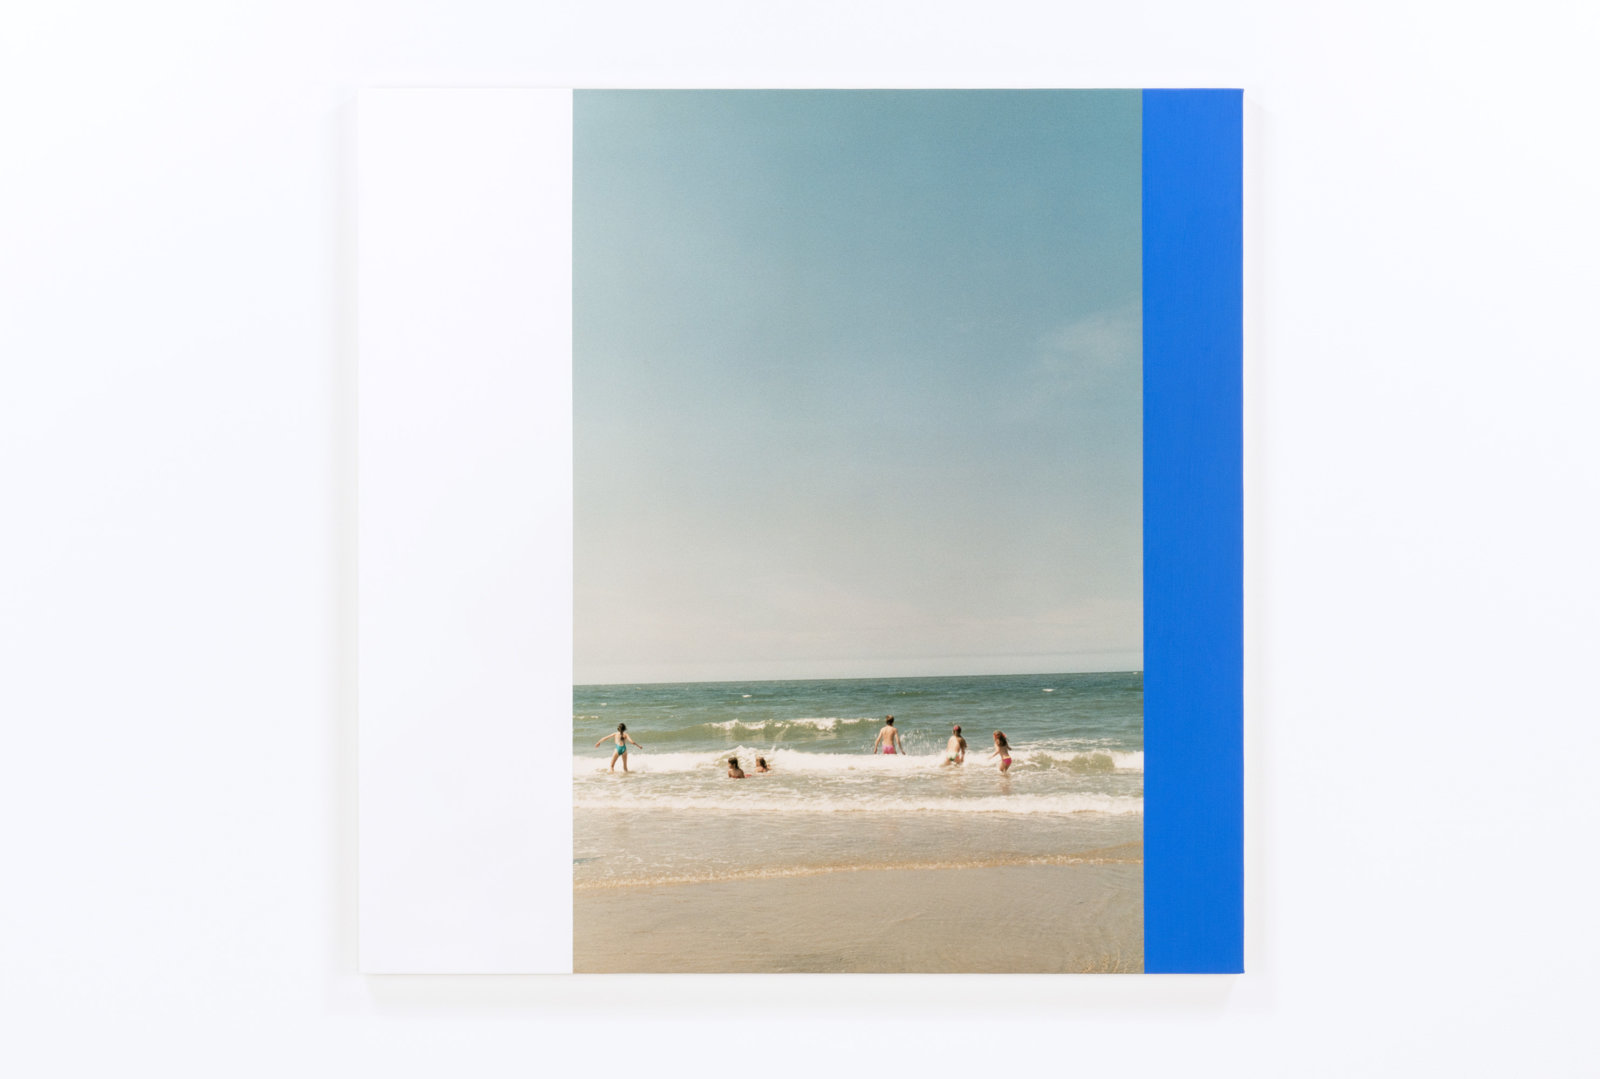 Ian Wallace, Hommage a Mondrian XVI (Beach at Domburg III), 1990, photolaminate and acrylic on canvas, 48 x 48 in. (122 x 122 cm)